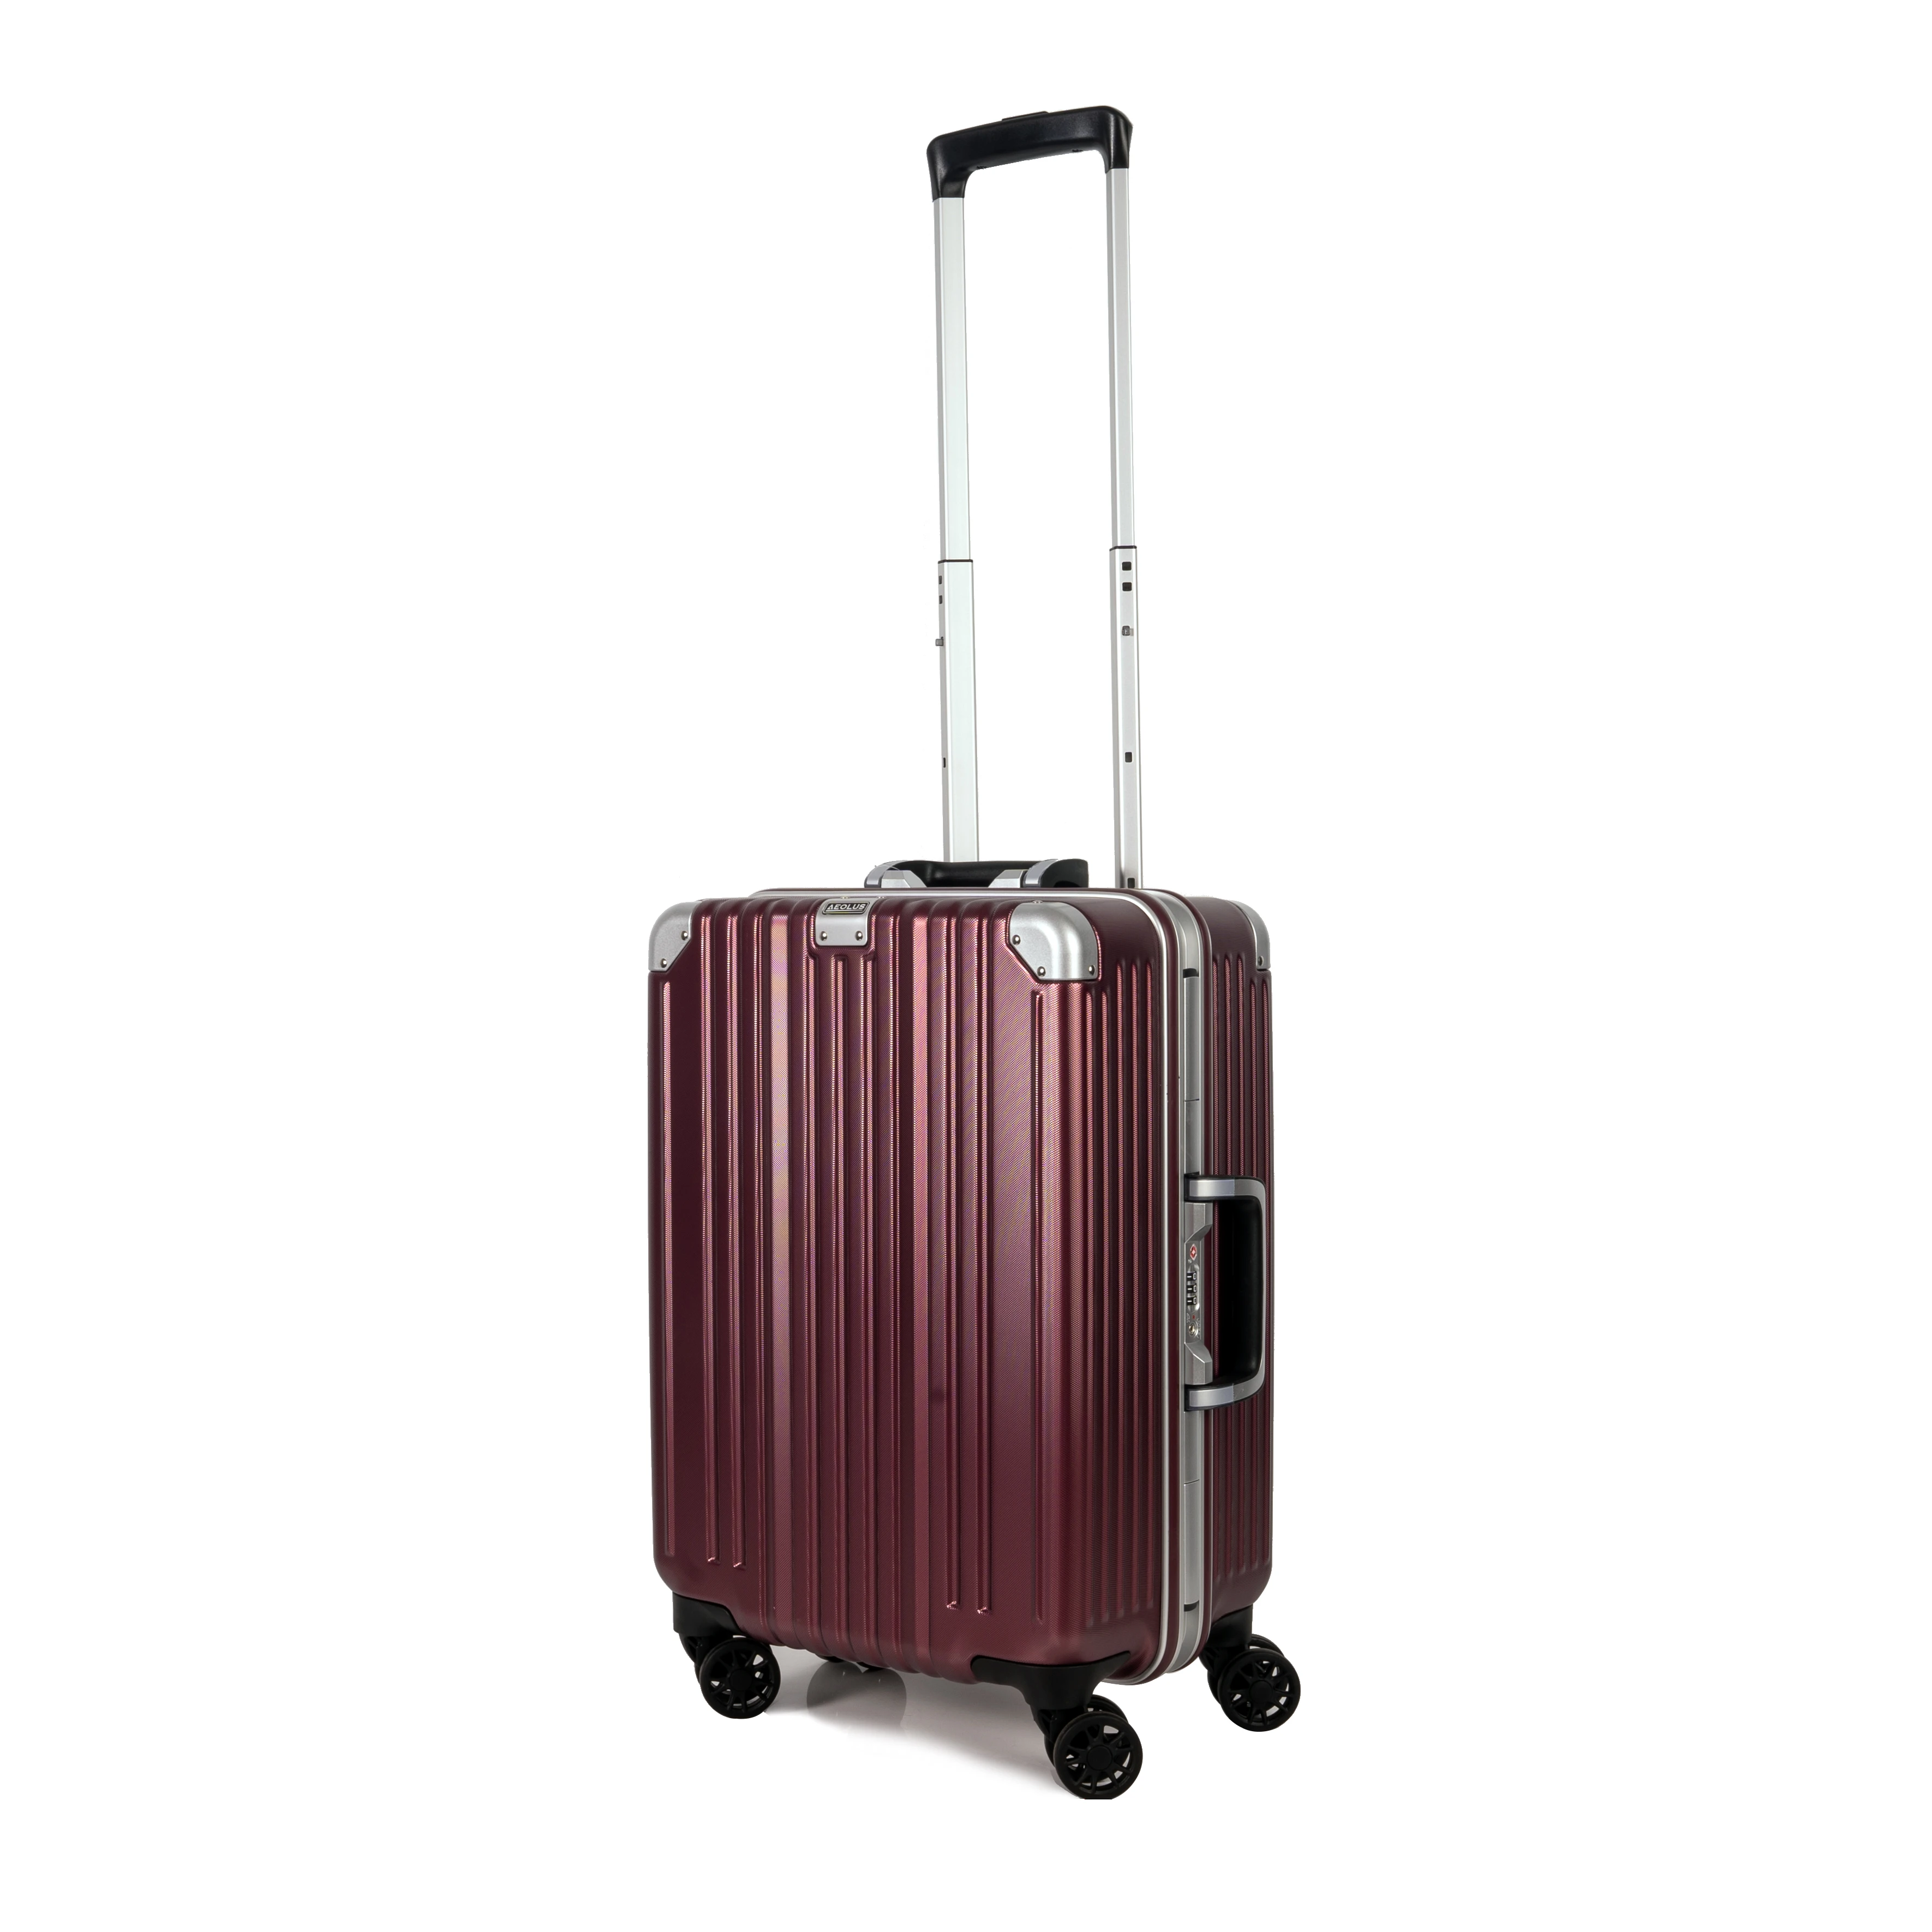 Durable aluminum suitcase TSA lock suitcase universal wheel